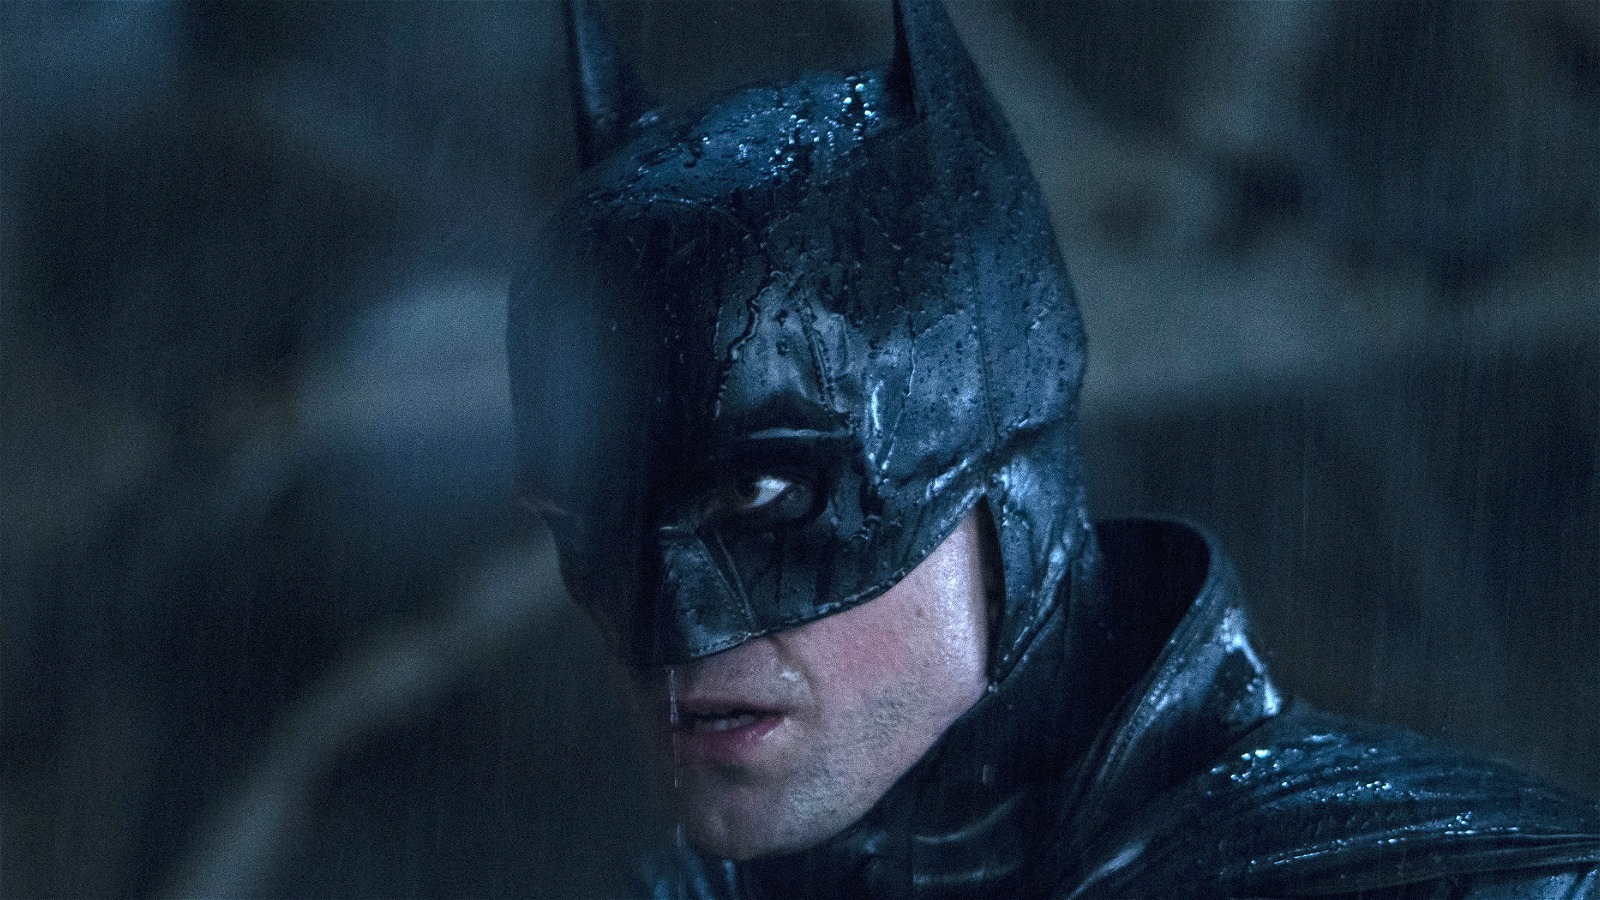 The Batman Action Scene That Surprisingly Used No CGI